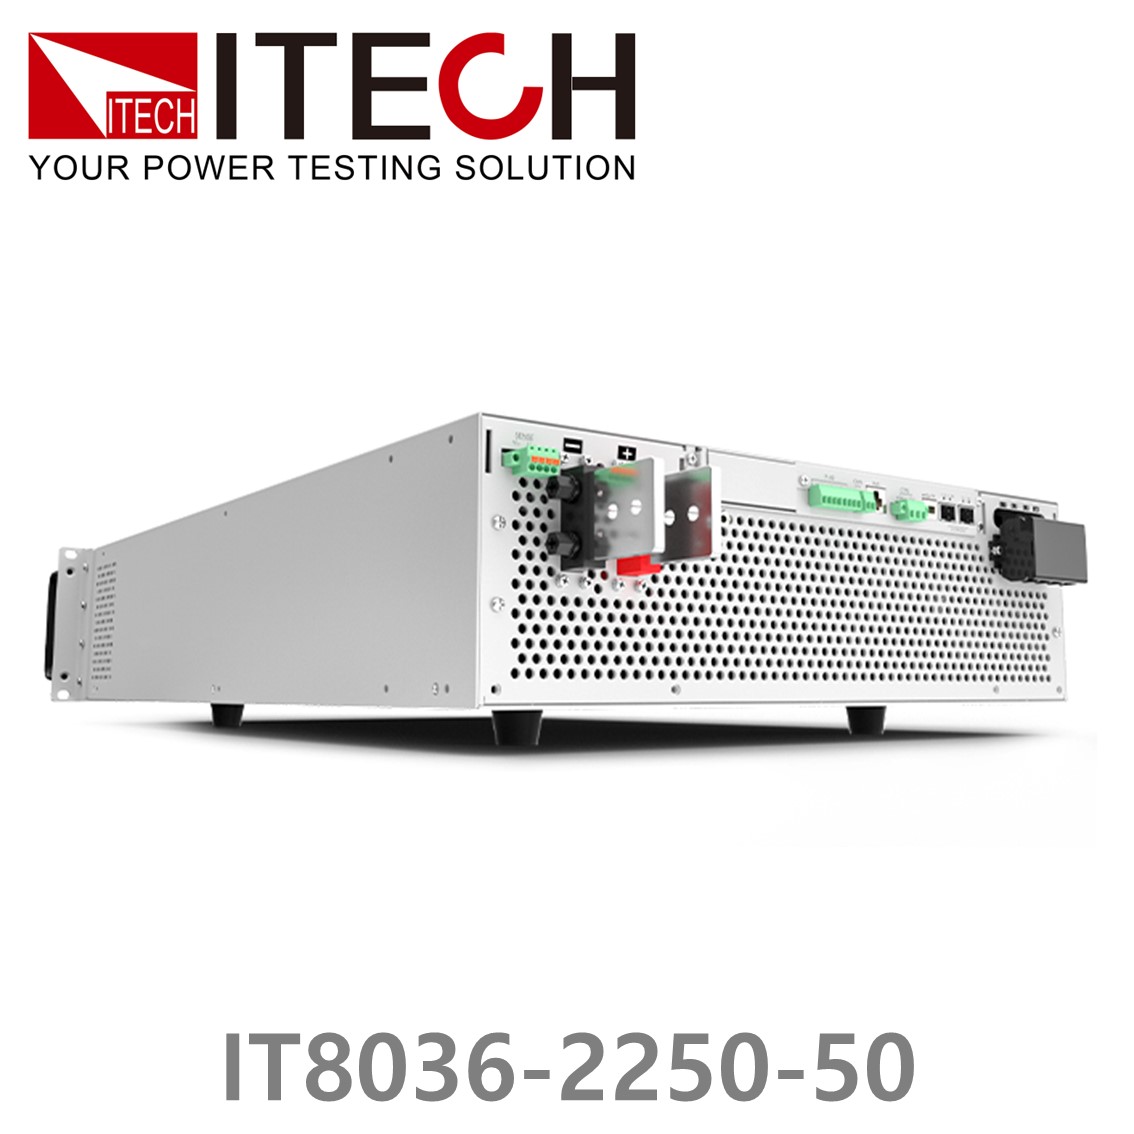 [ ITECH ] IT8036-2250-50  회생형 DC전자로드, DC전자부하 2250V/50A/36kW (6U)